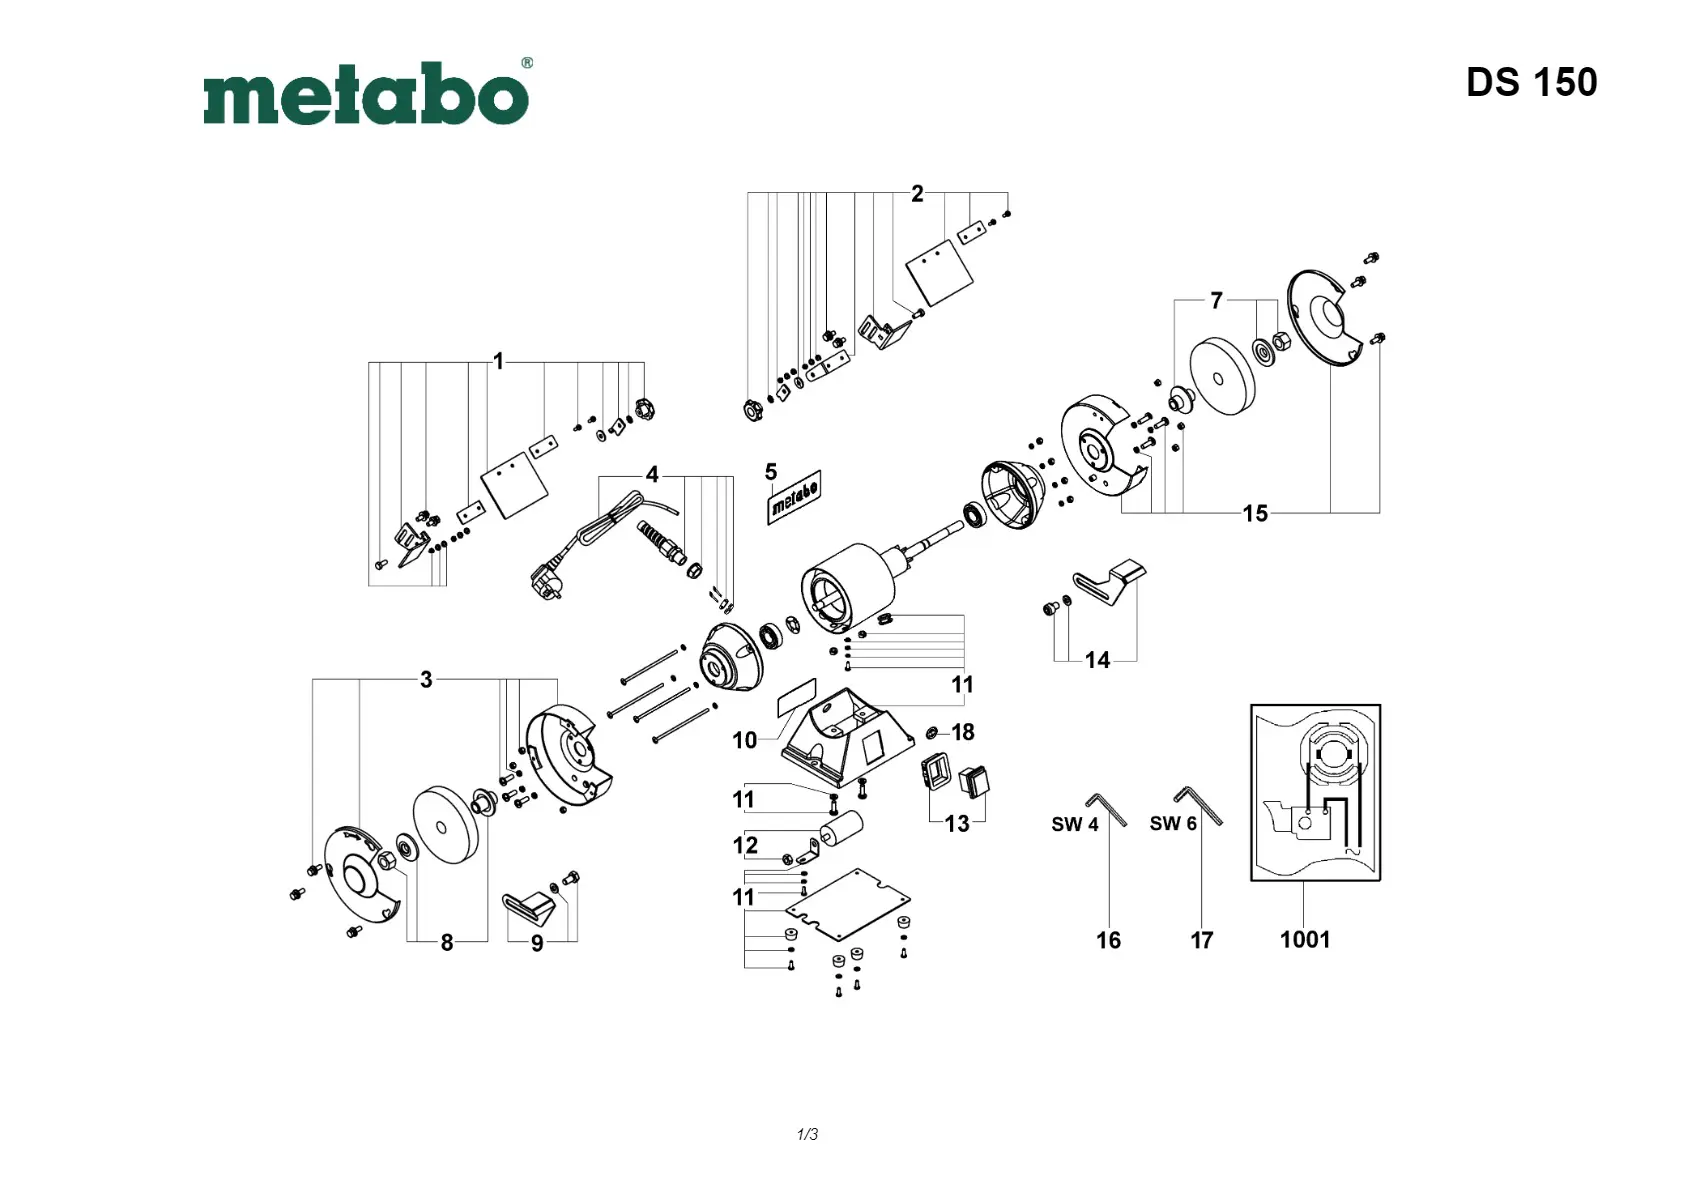 Metabo Metabo label